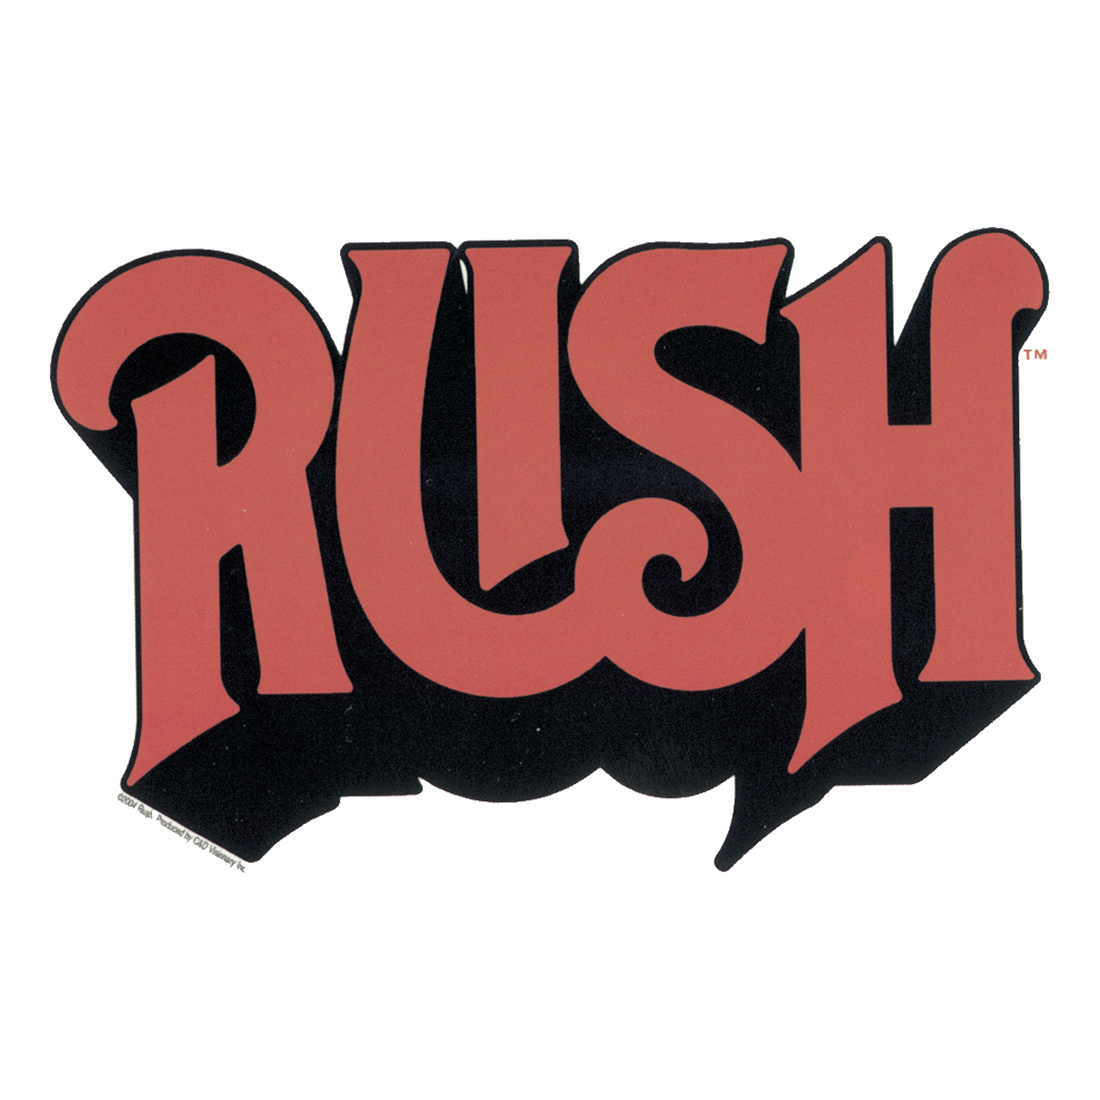 Signals (Rush album) - Wikipedia